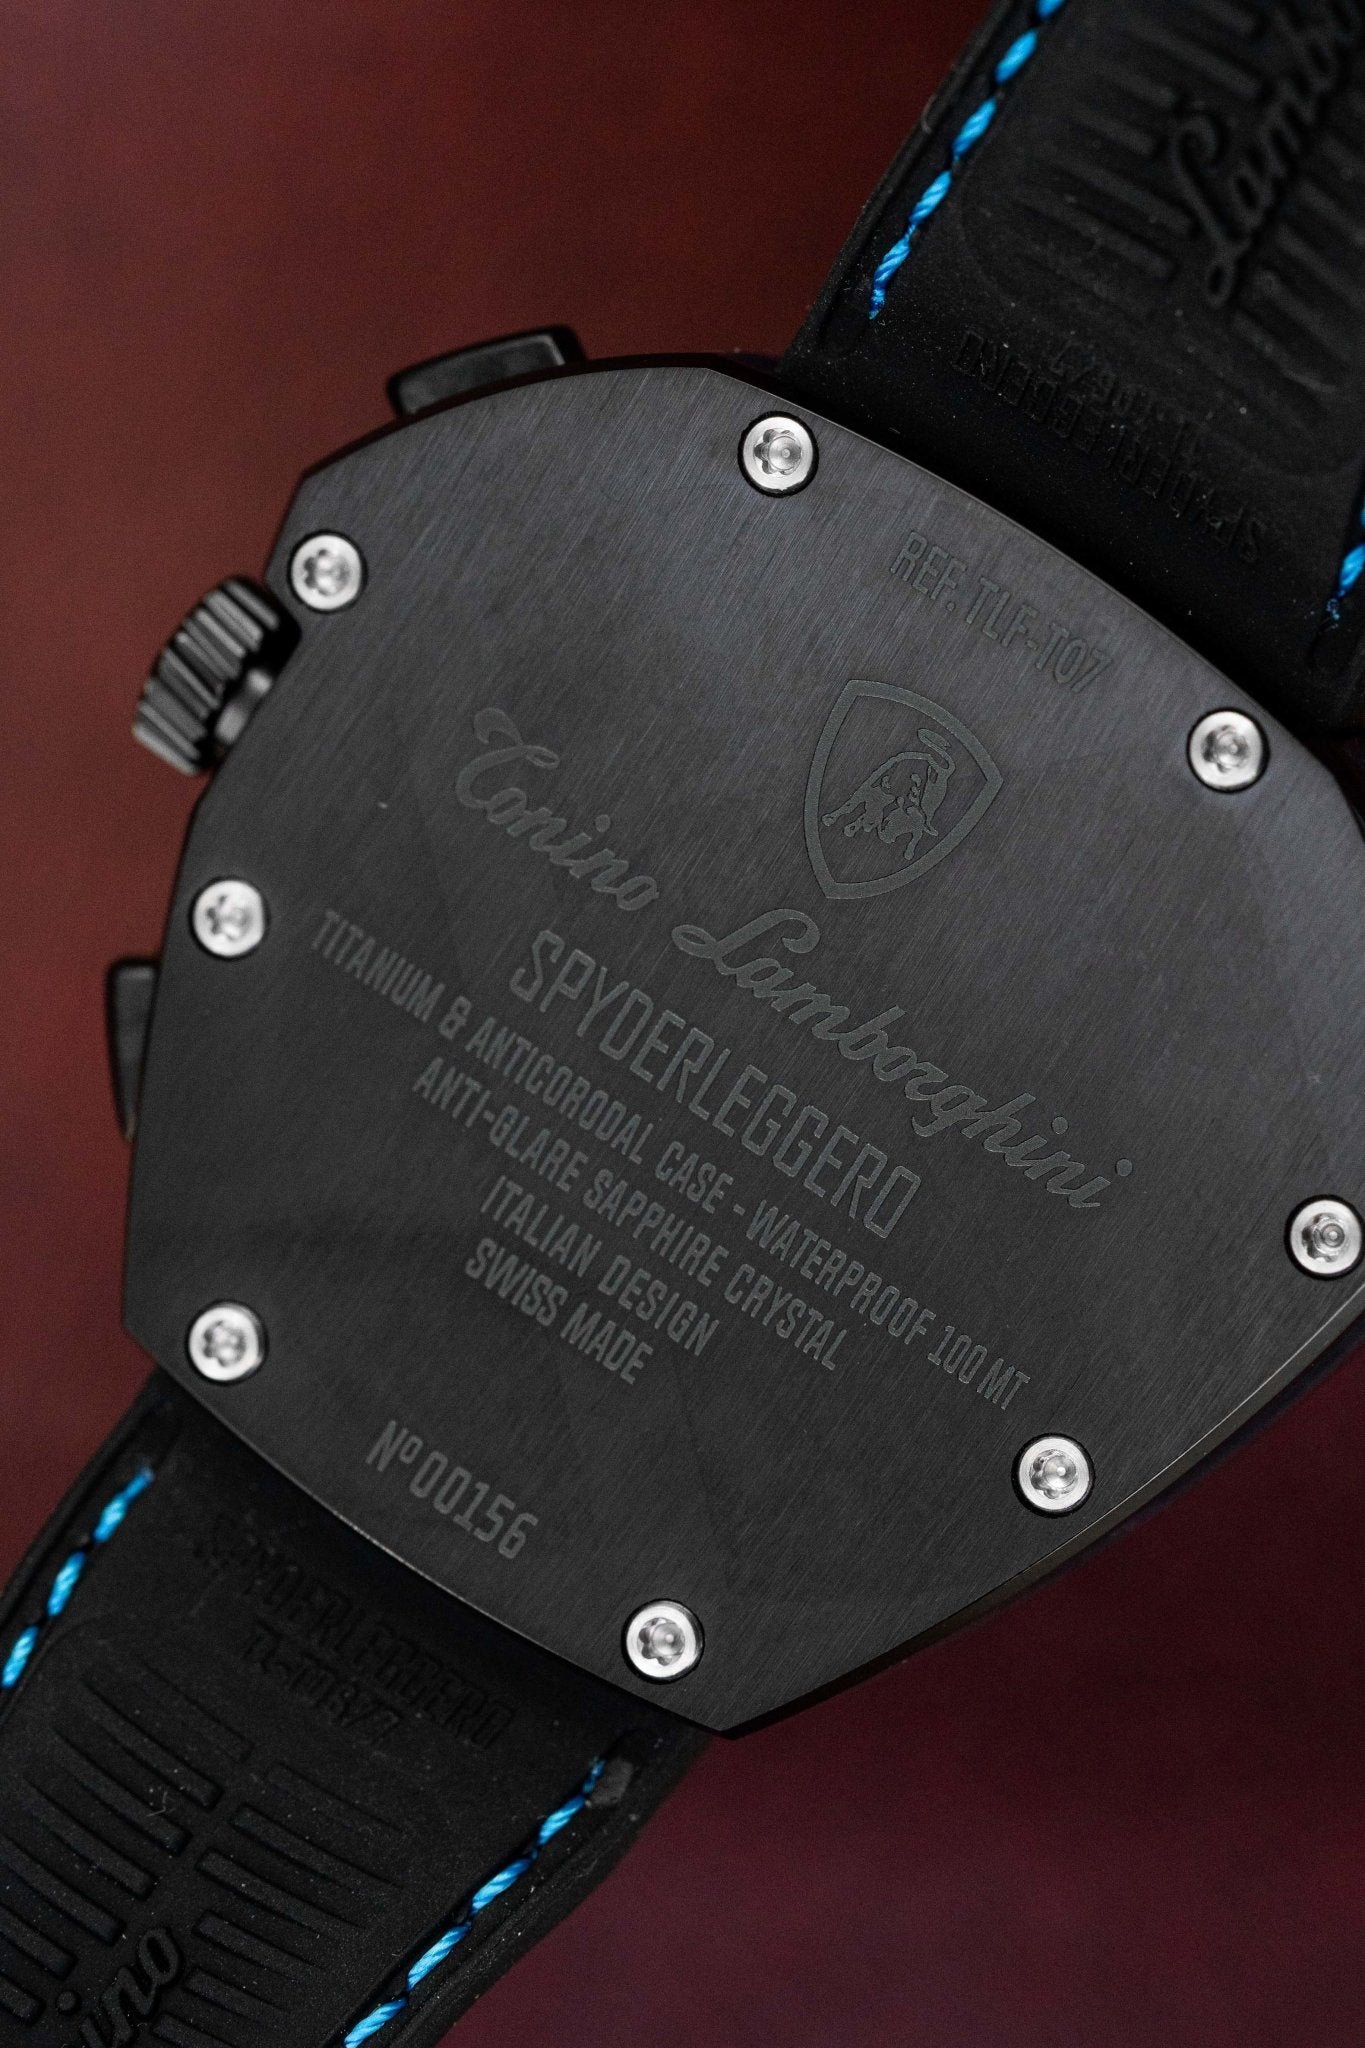 Tonino Lamborghini Spyderleggero Chronograph Day Date Blue - Watches & Crystals